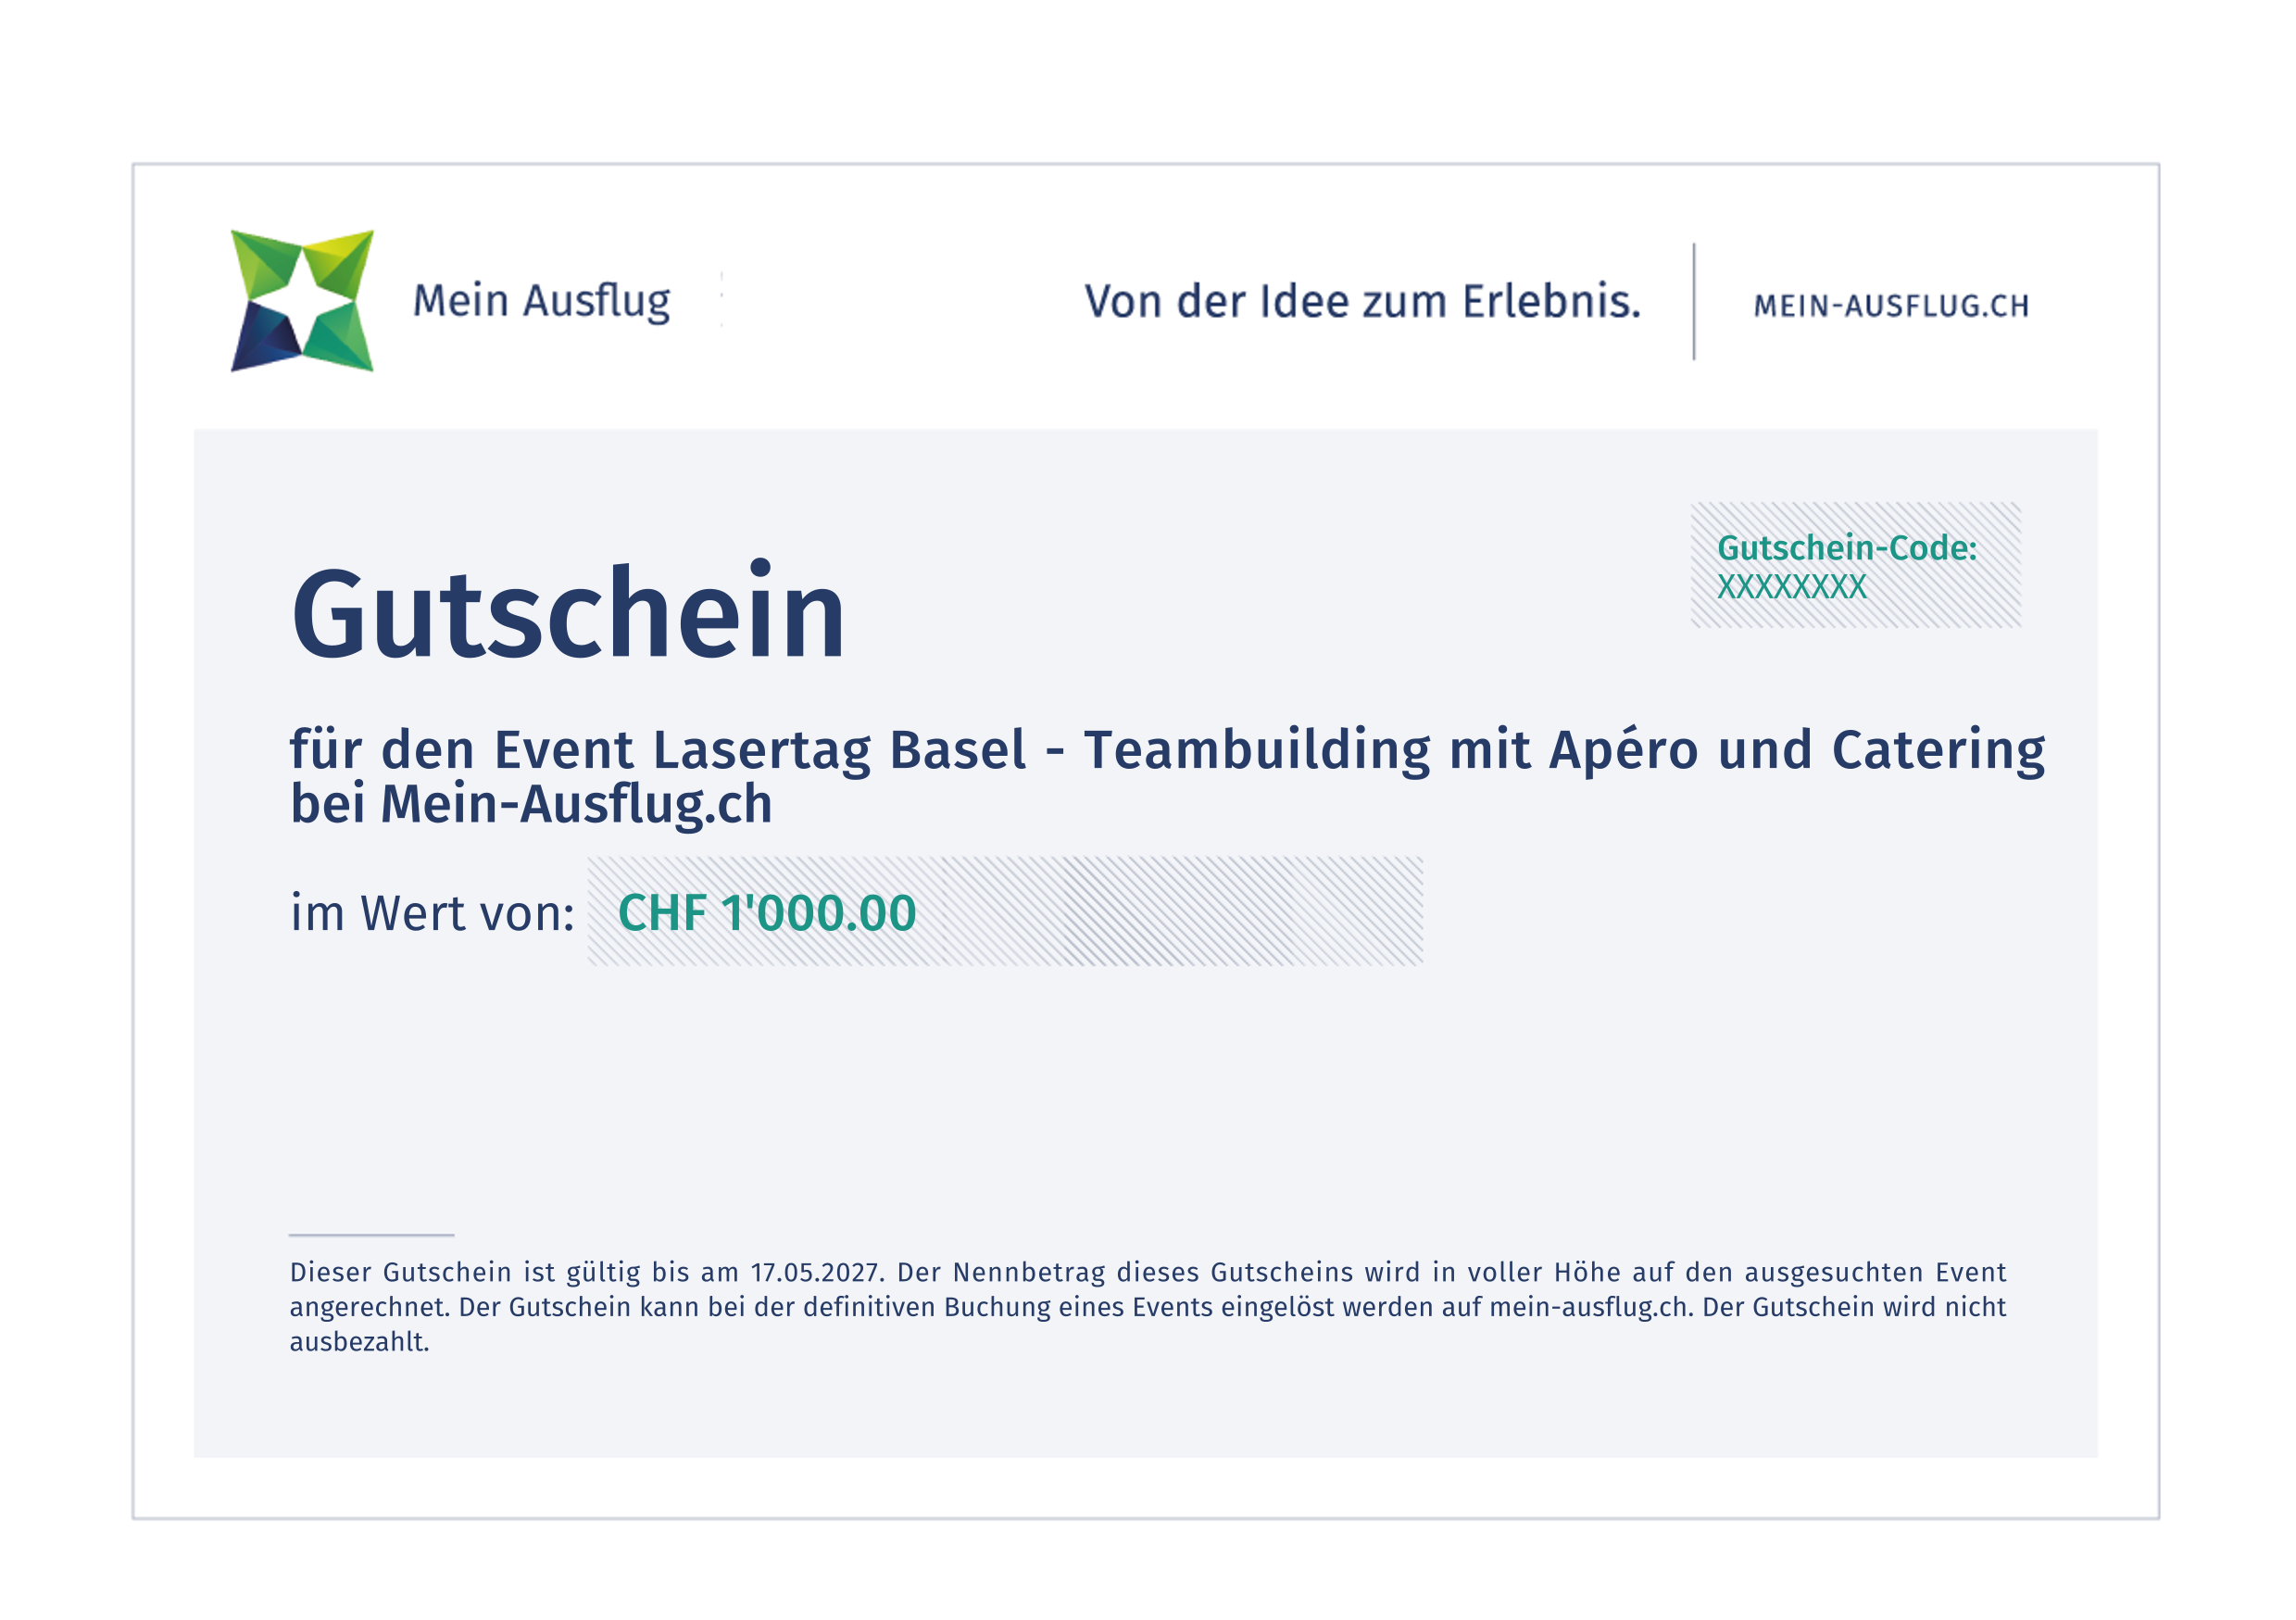 Lasertag Basel - Teambuilding mit Apéro und Catering